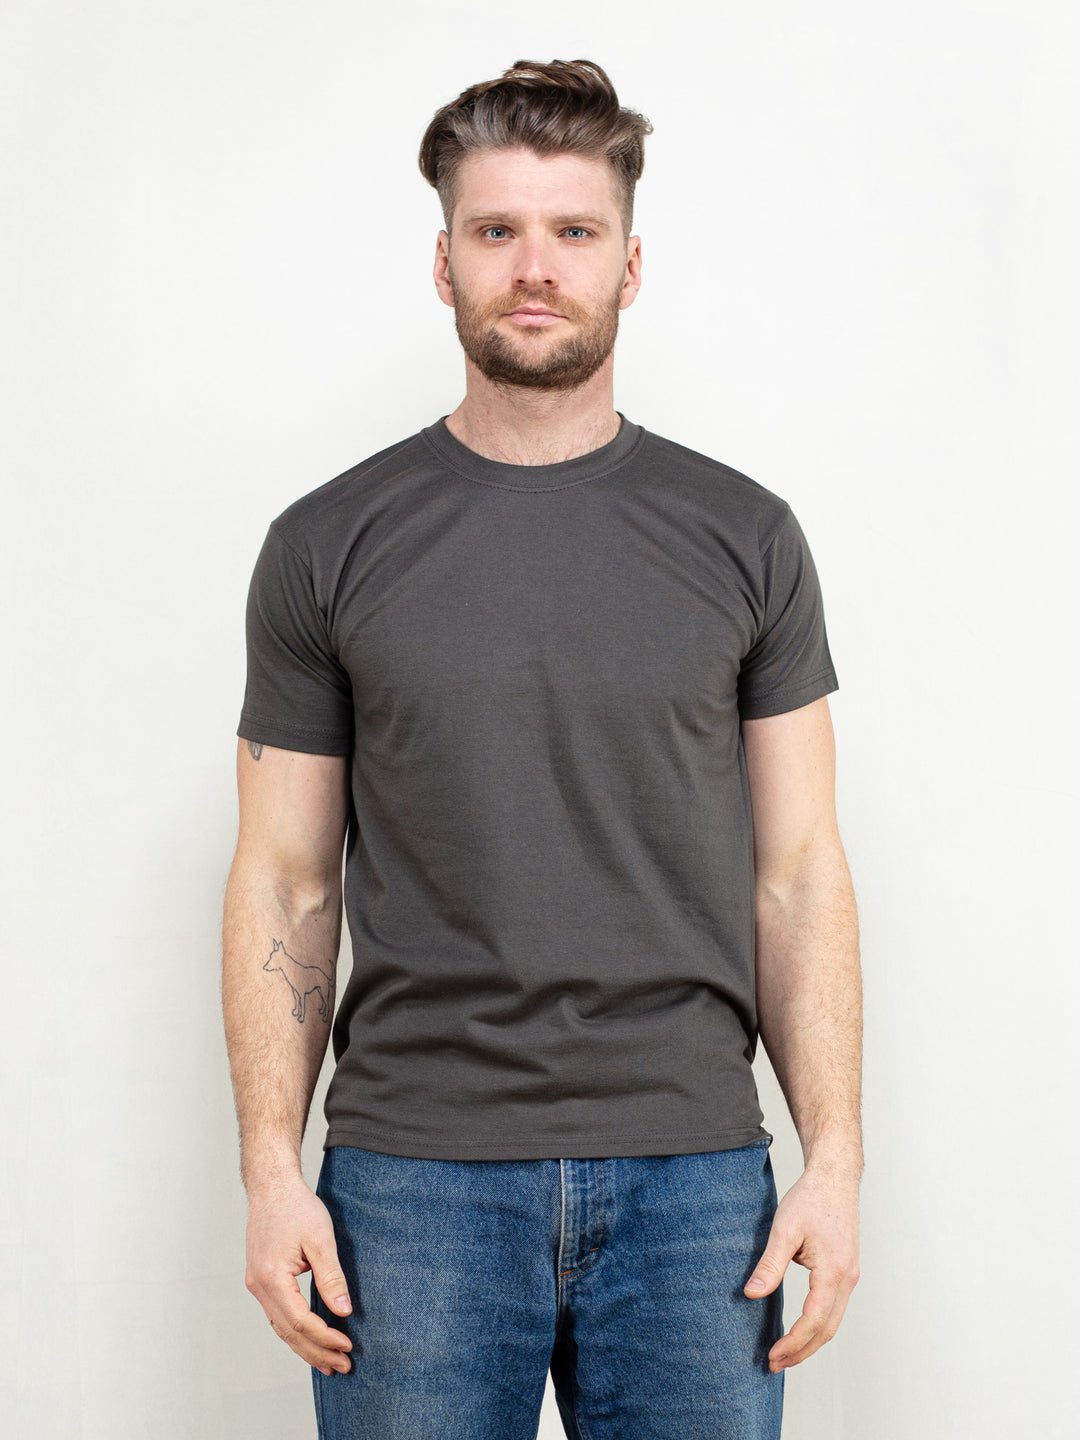 Grey Men's T-Shirt basic men short sleeve shirt plain summer shirt tee vacation tshirt minimalist boyfriend gift